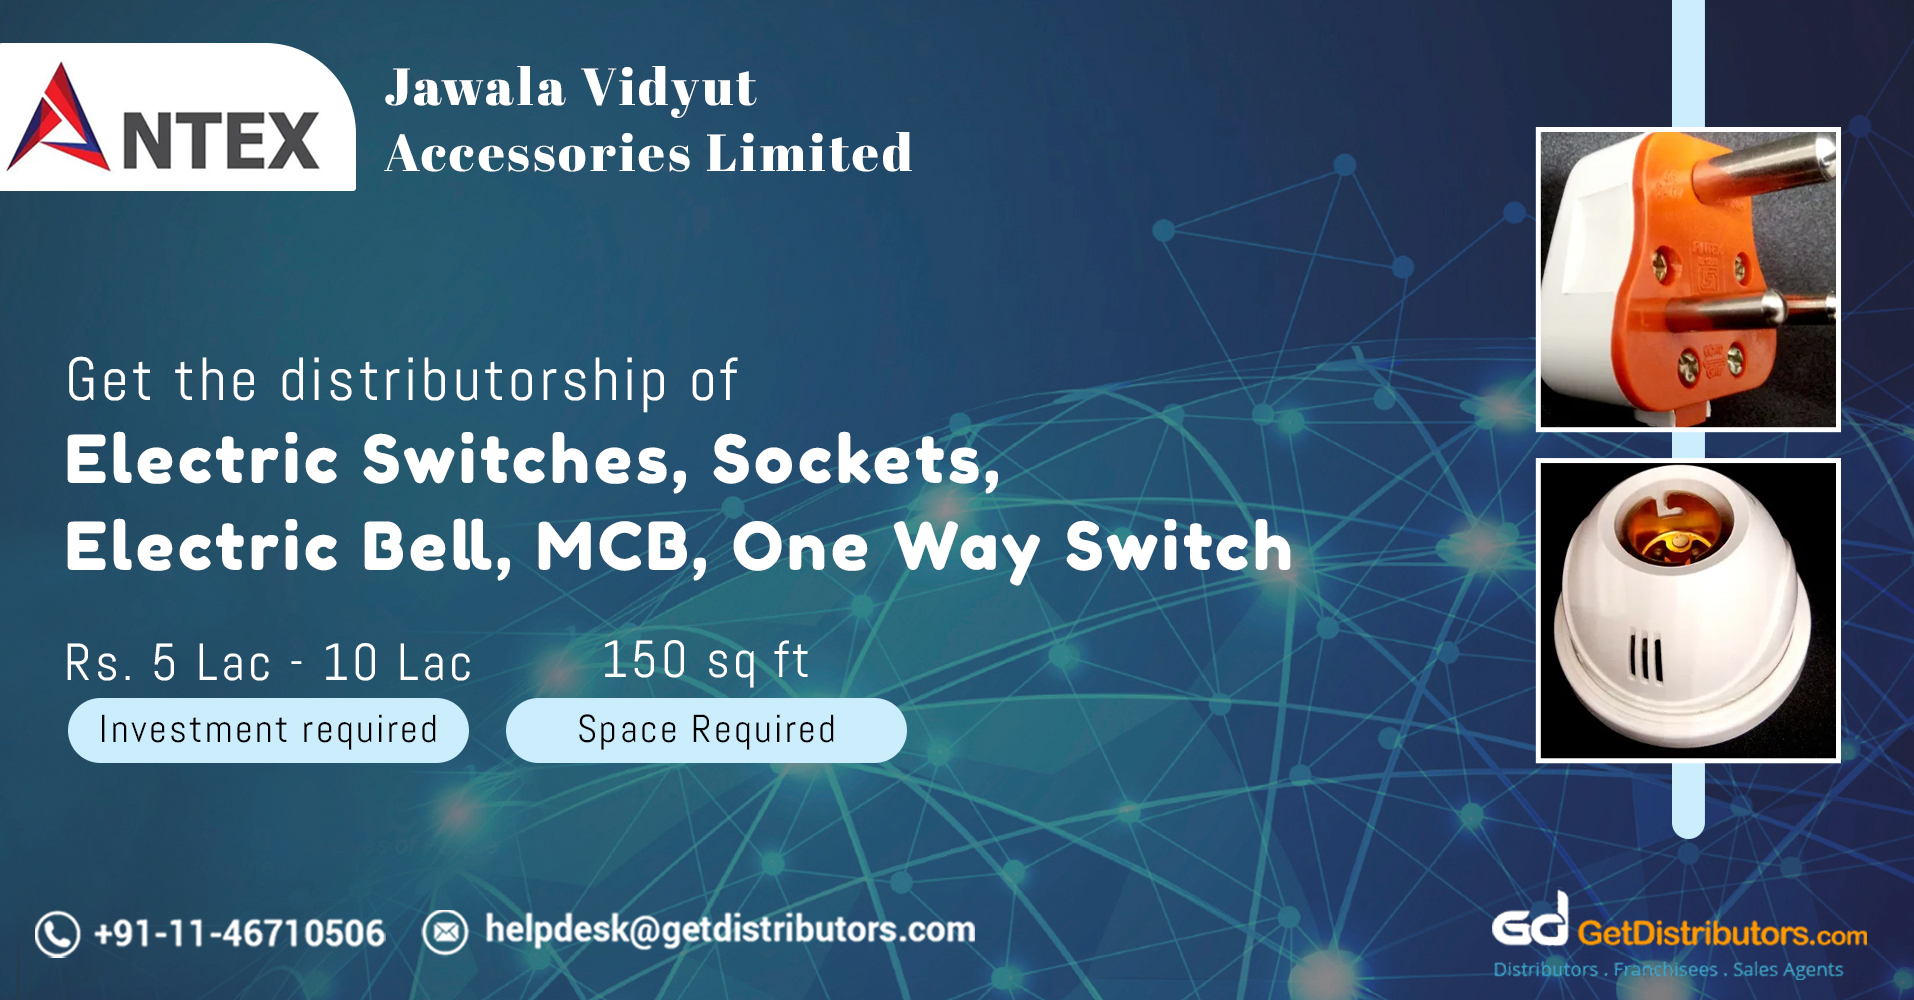 Jawala Vidyut Accessories Limited